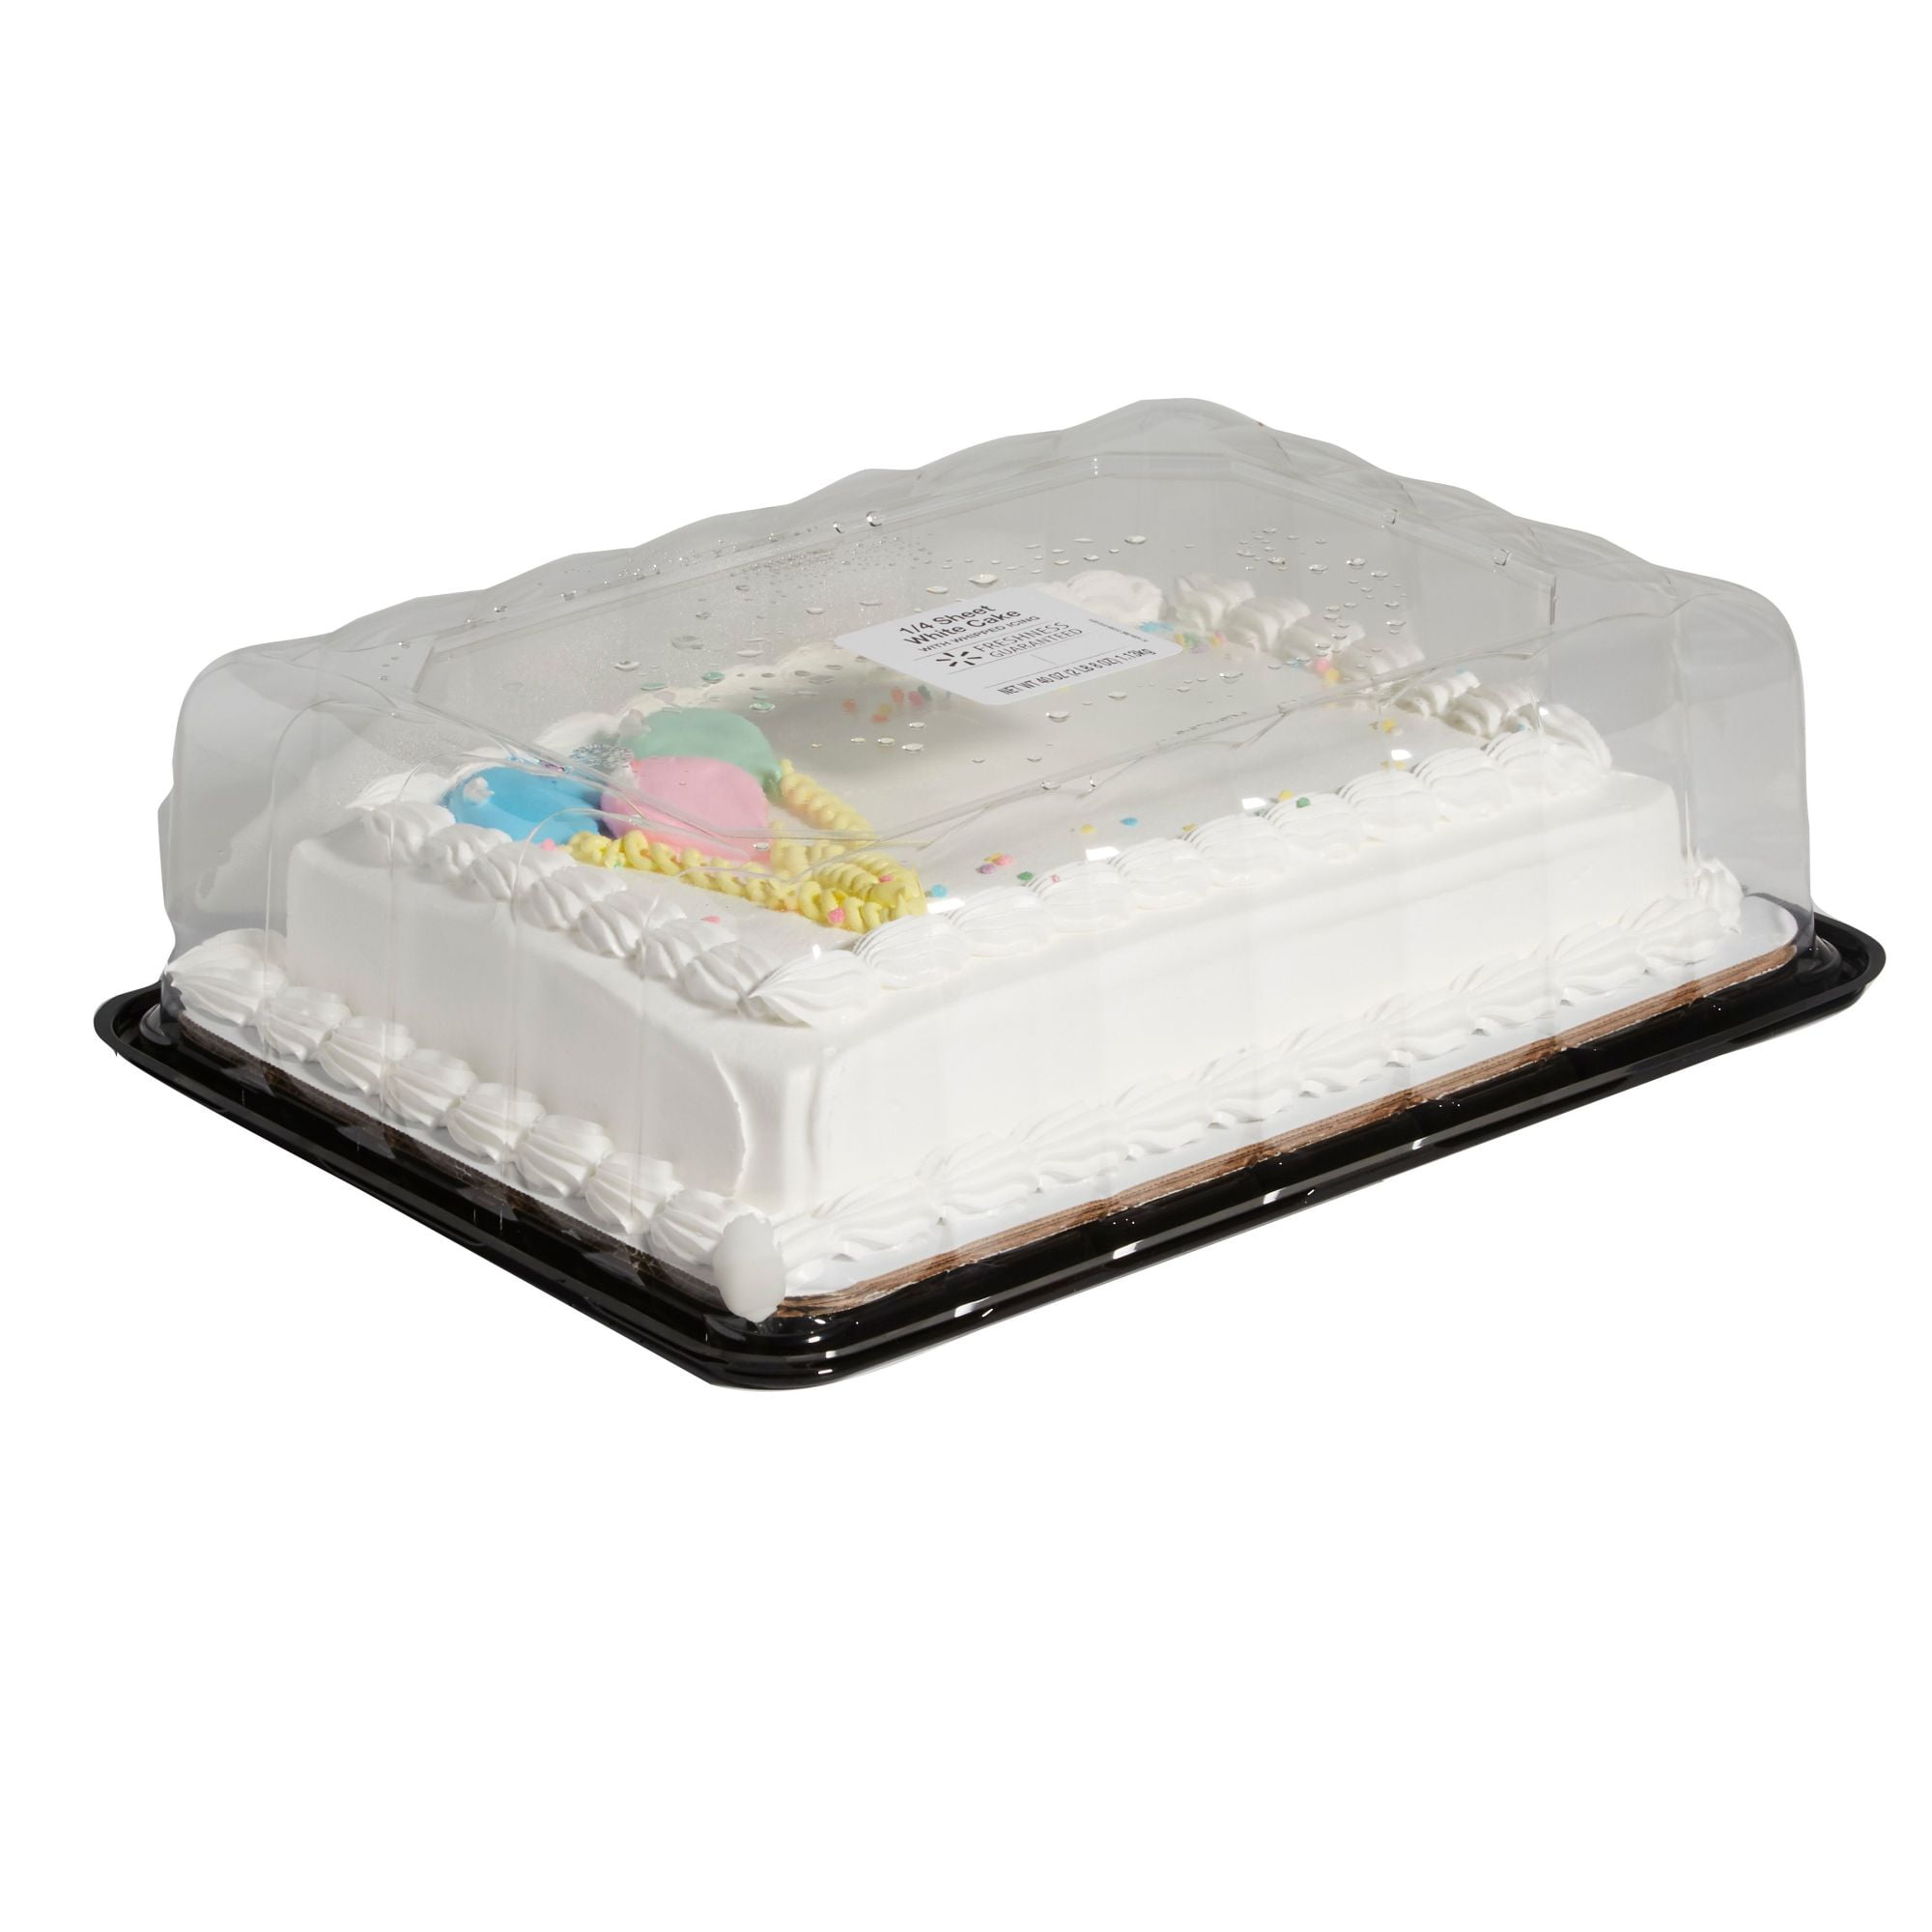 walmart online cake order